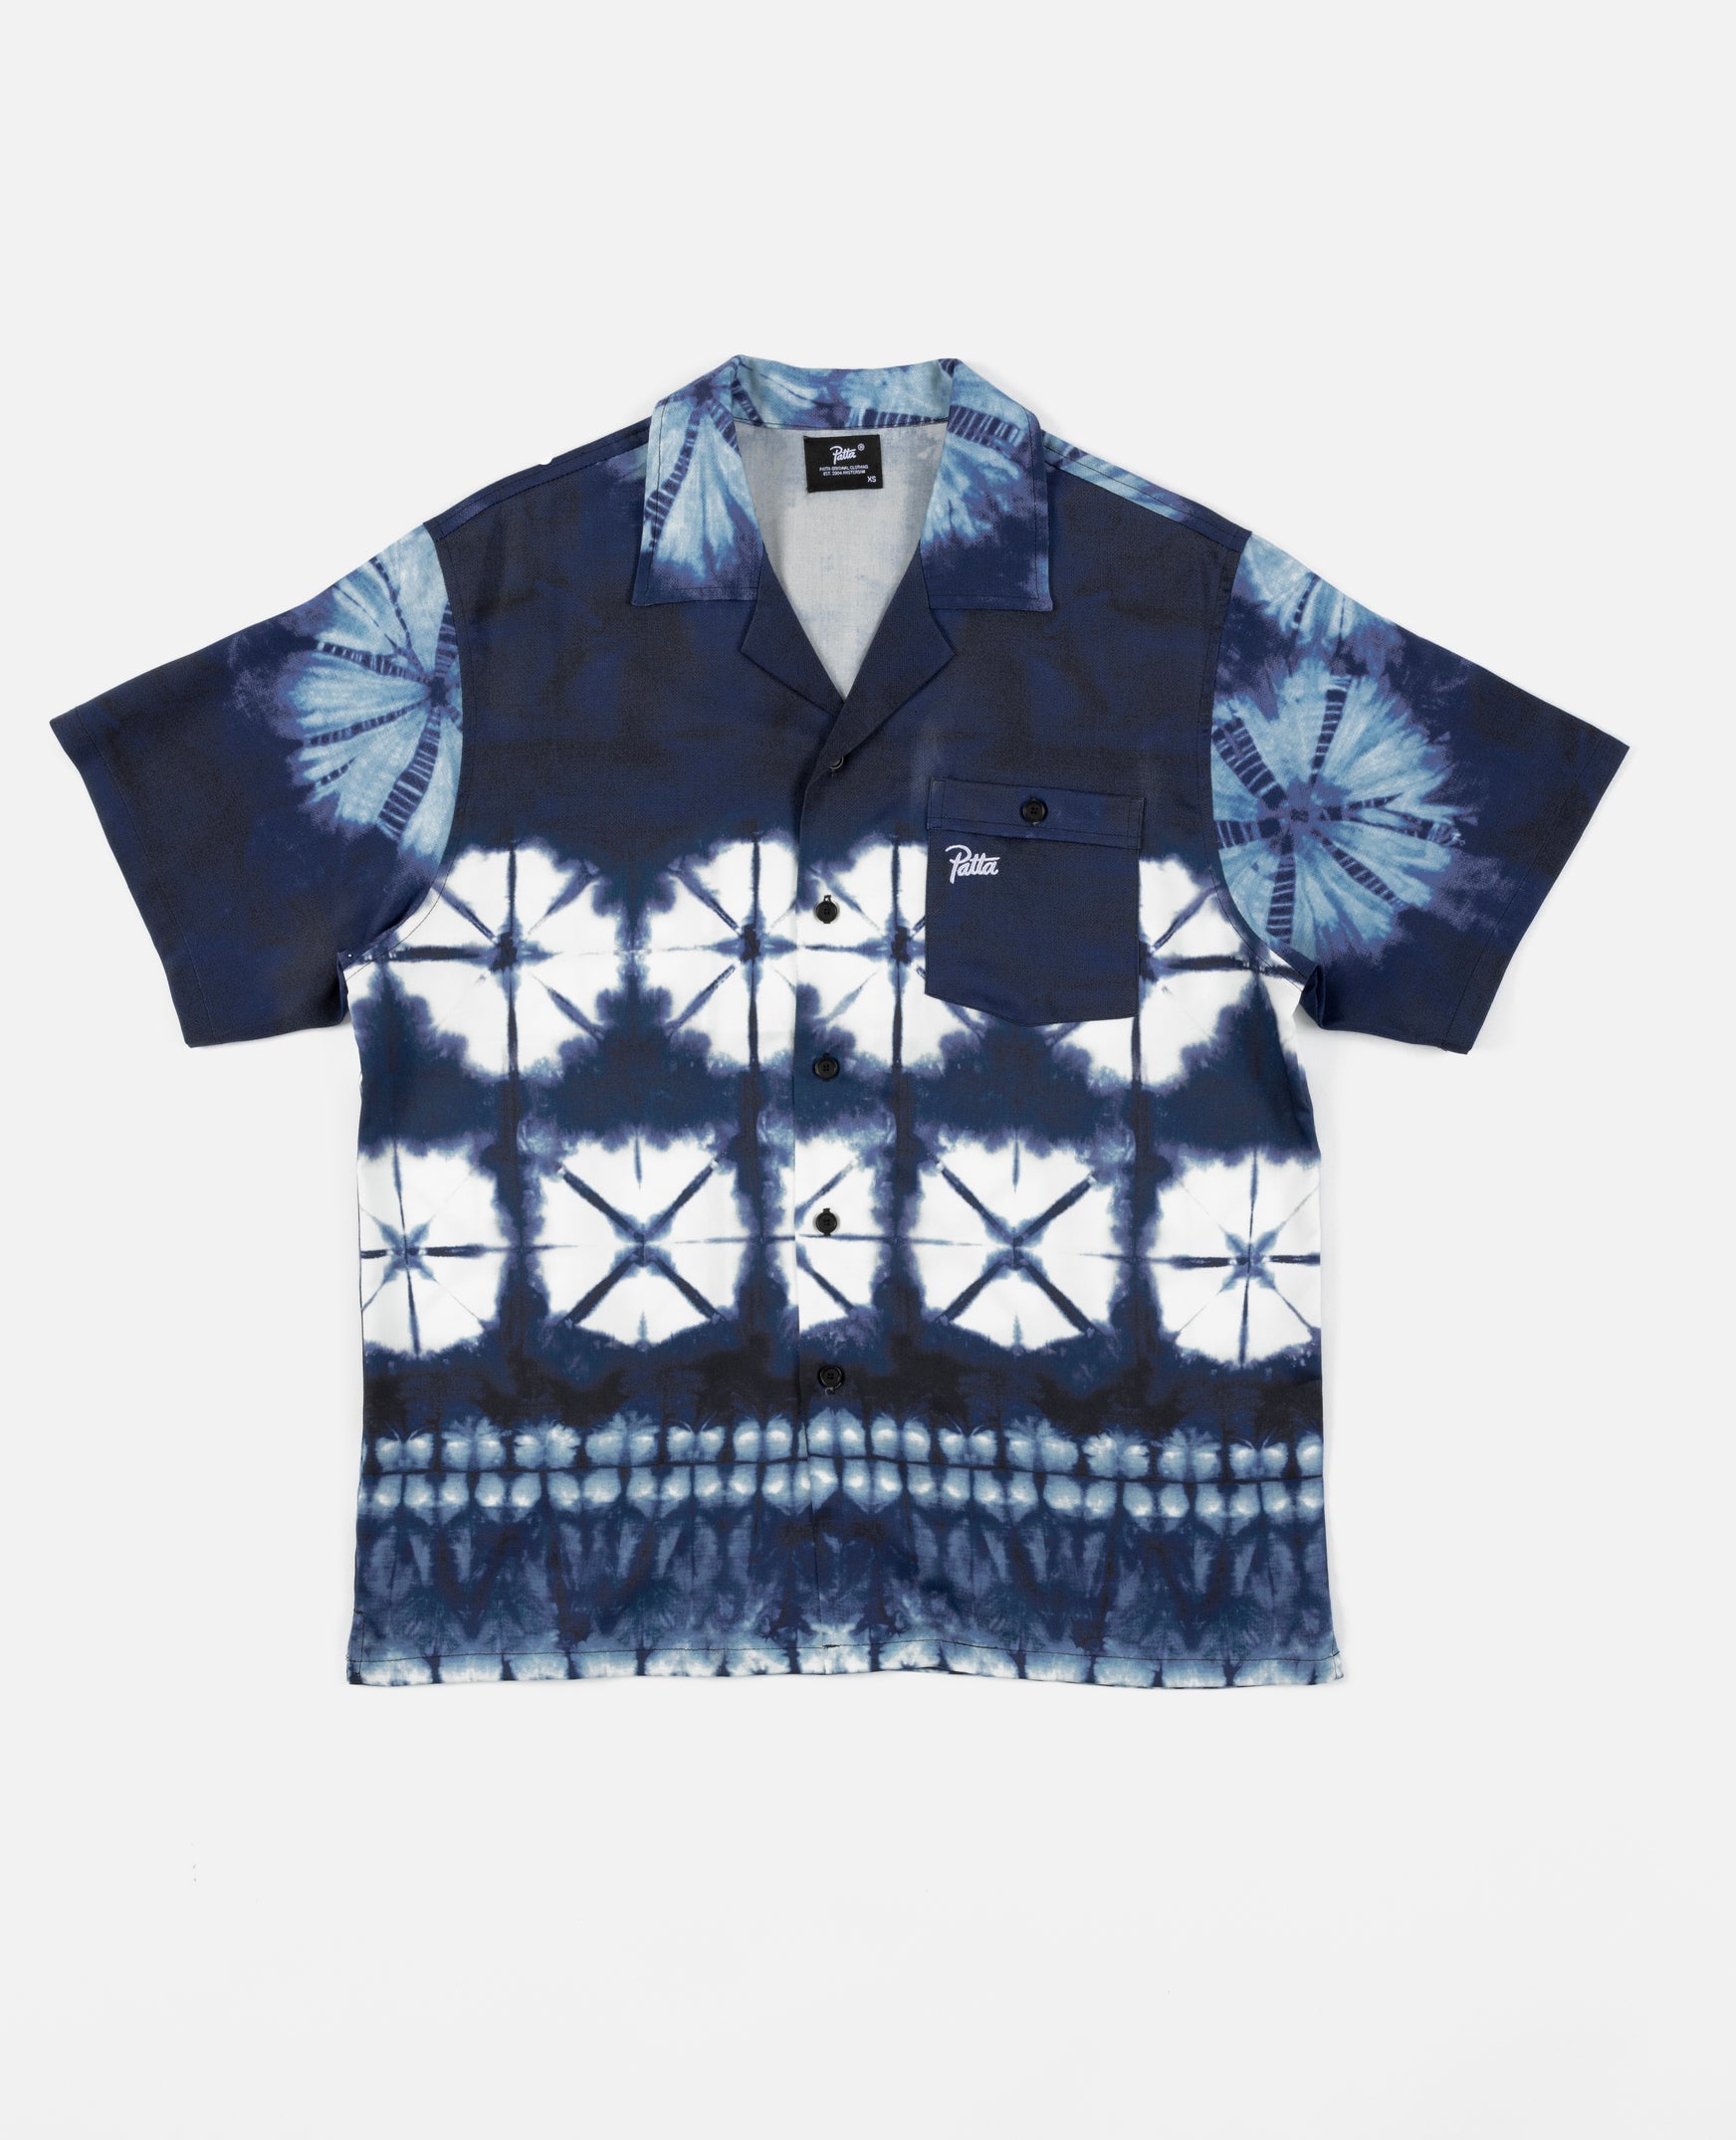 Patta Shibori Shortsleeve Shirt (Odyssey Gray)